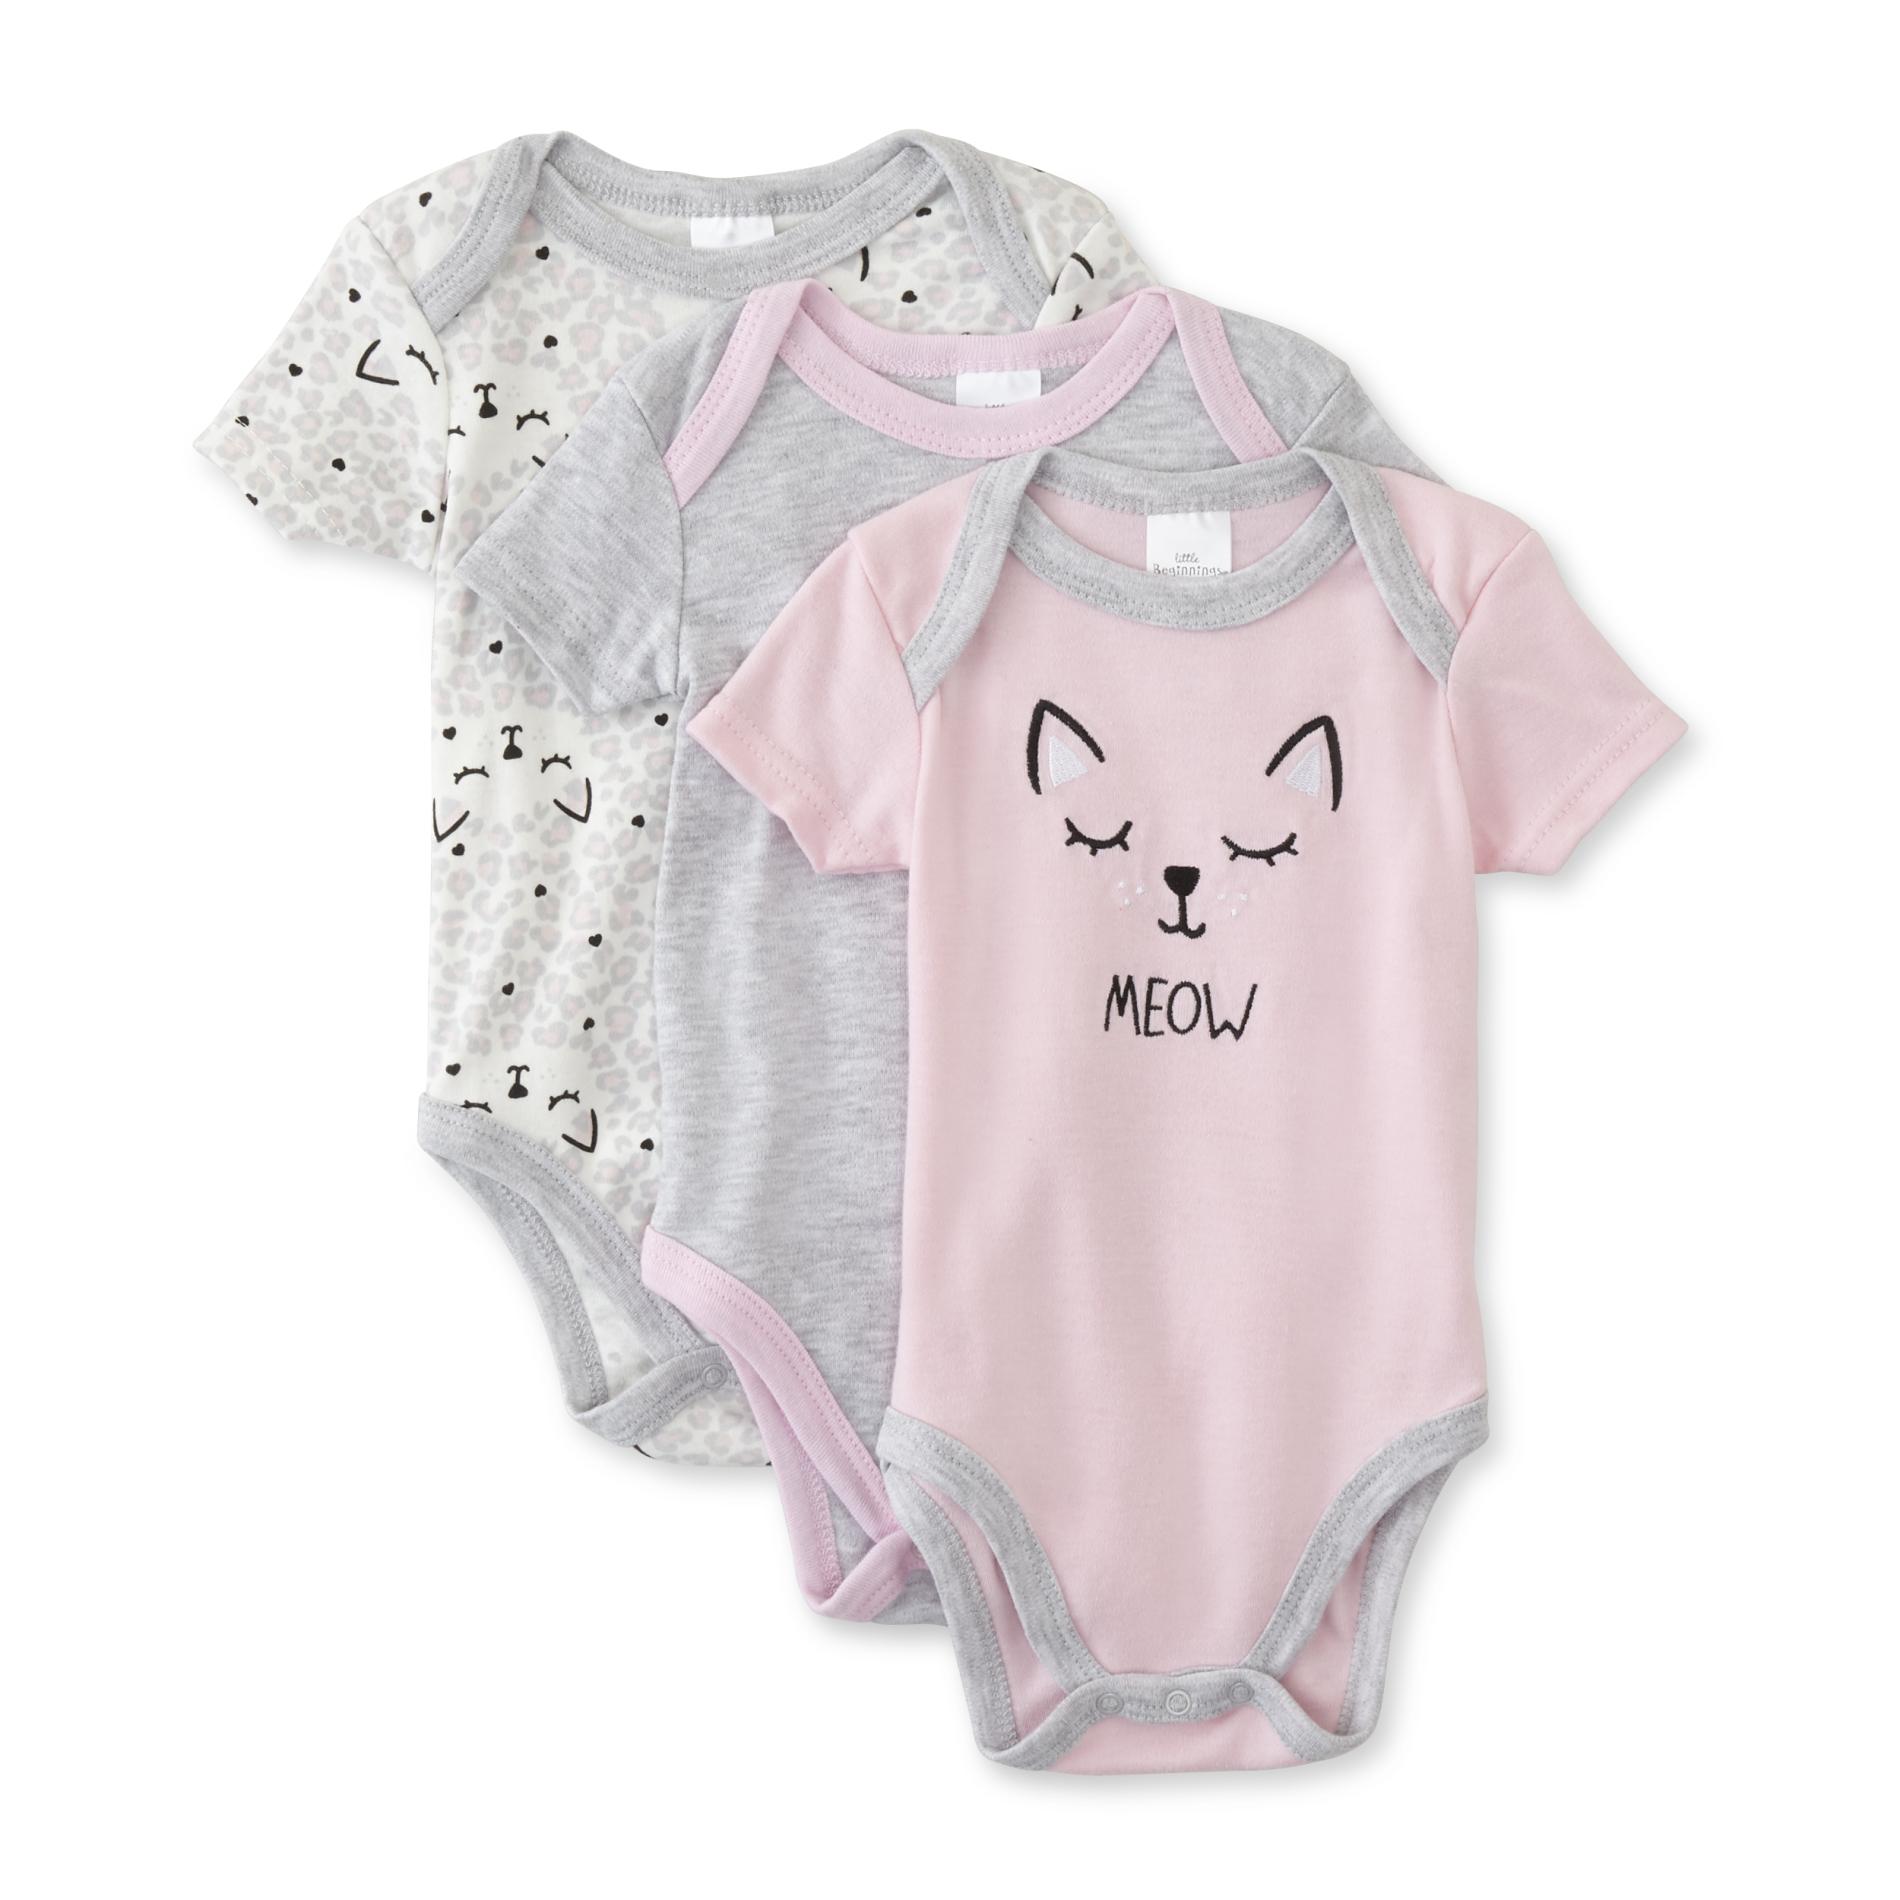 Cudlie Infant Girls' 3-Pack Bodysuits - Cat